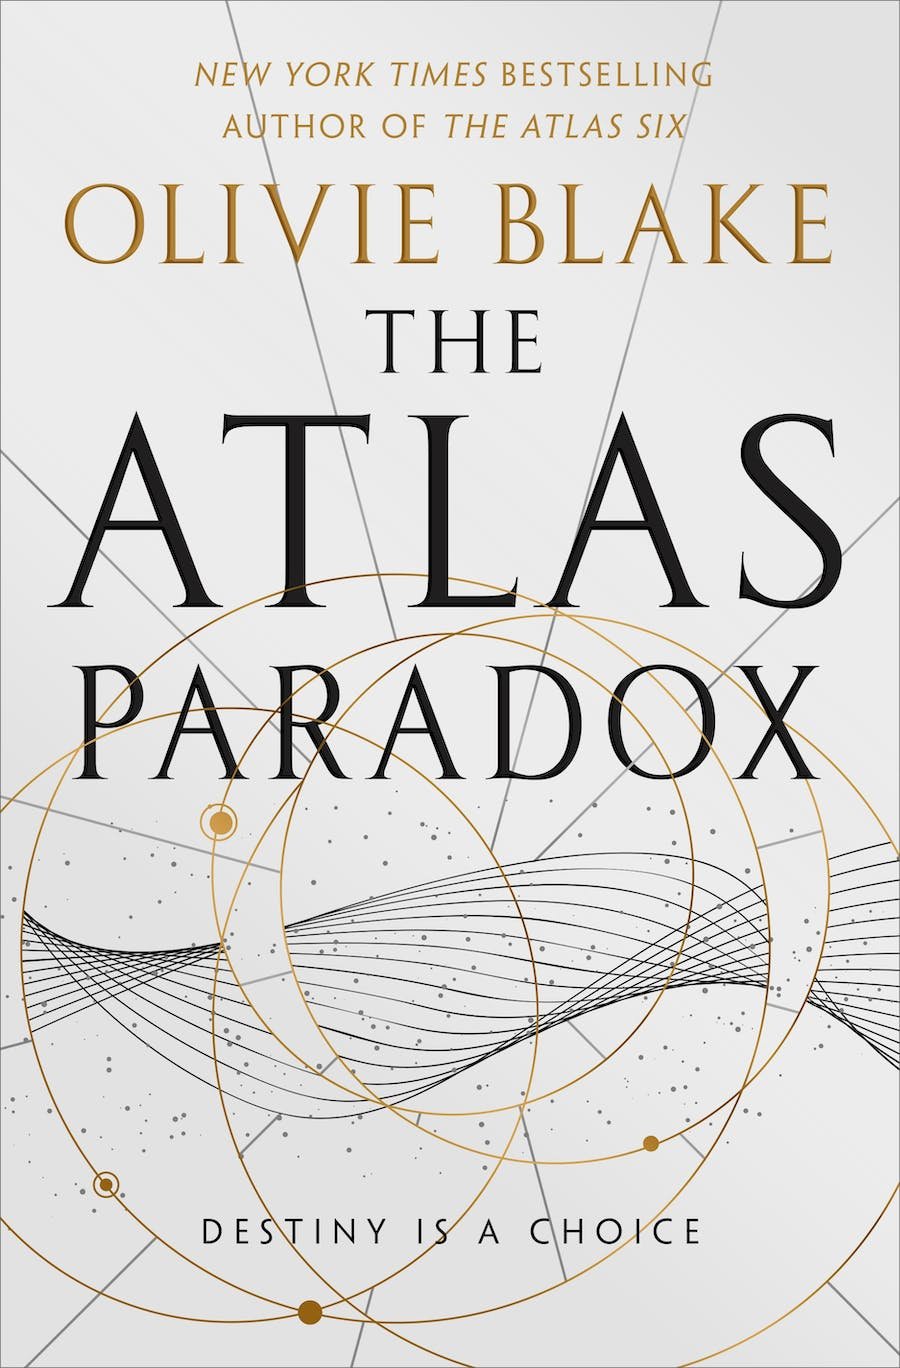 The Atlas Paradox cover